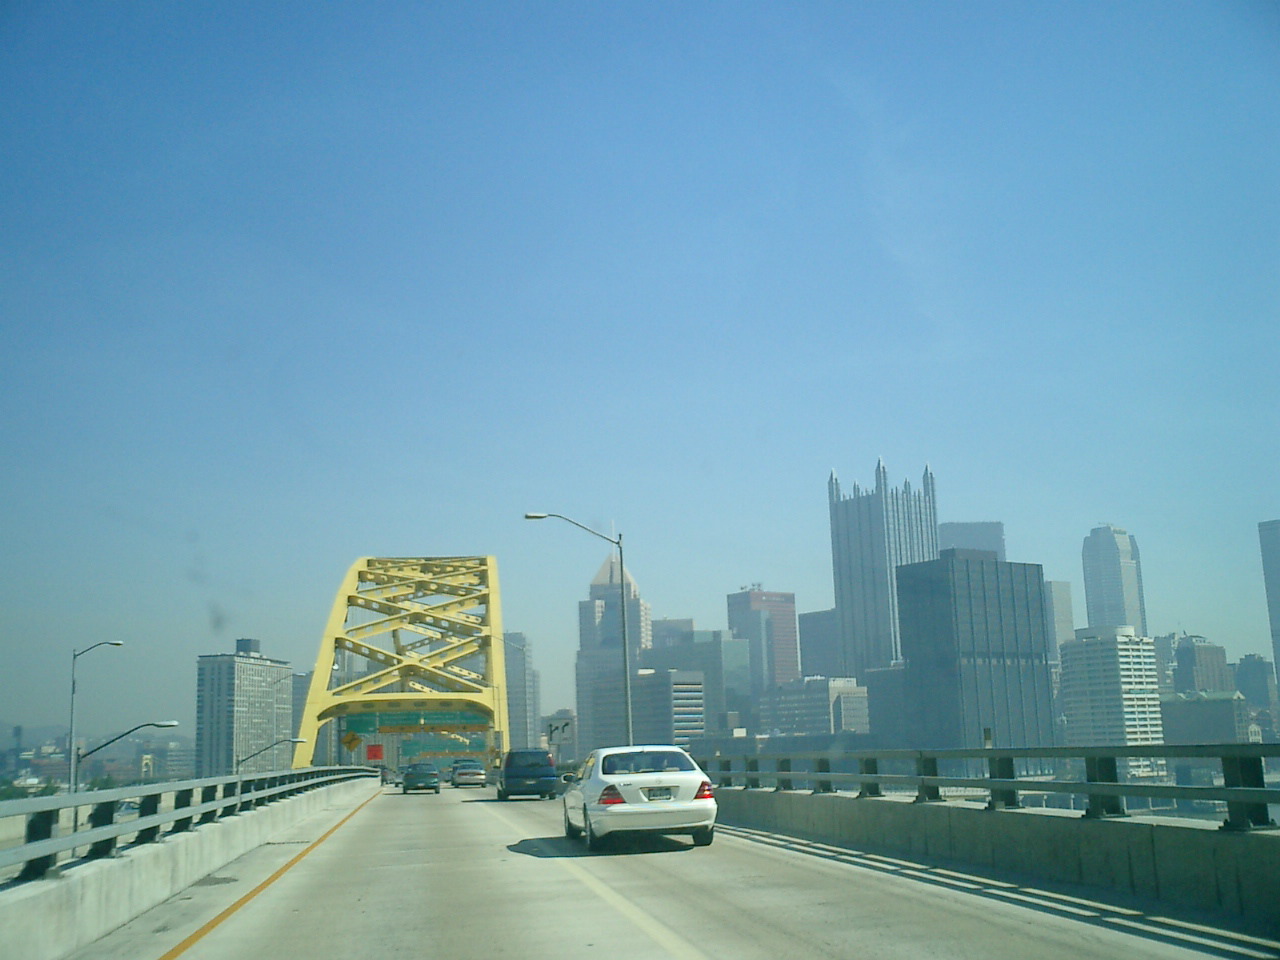 Entering Pittsburgh